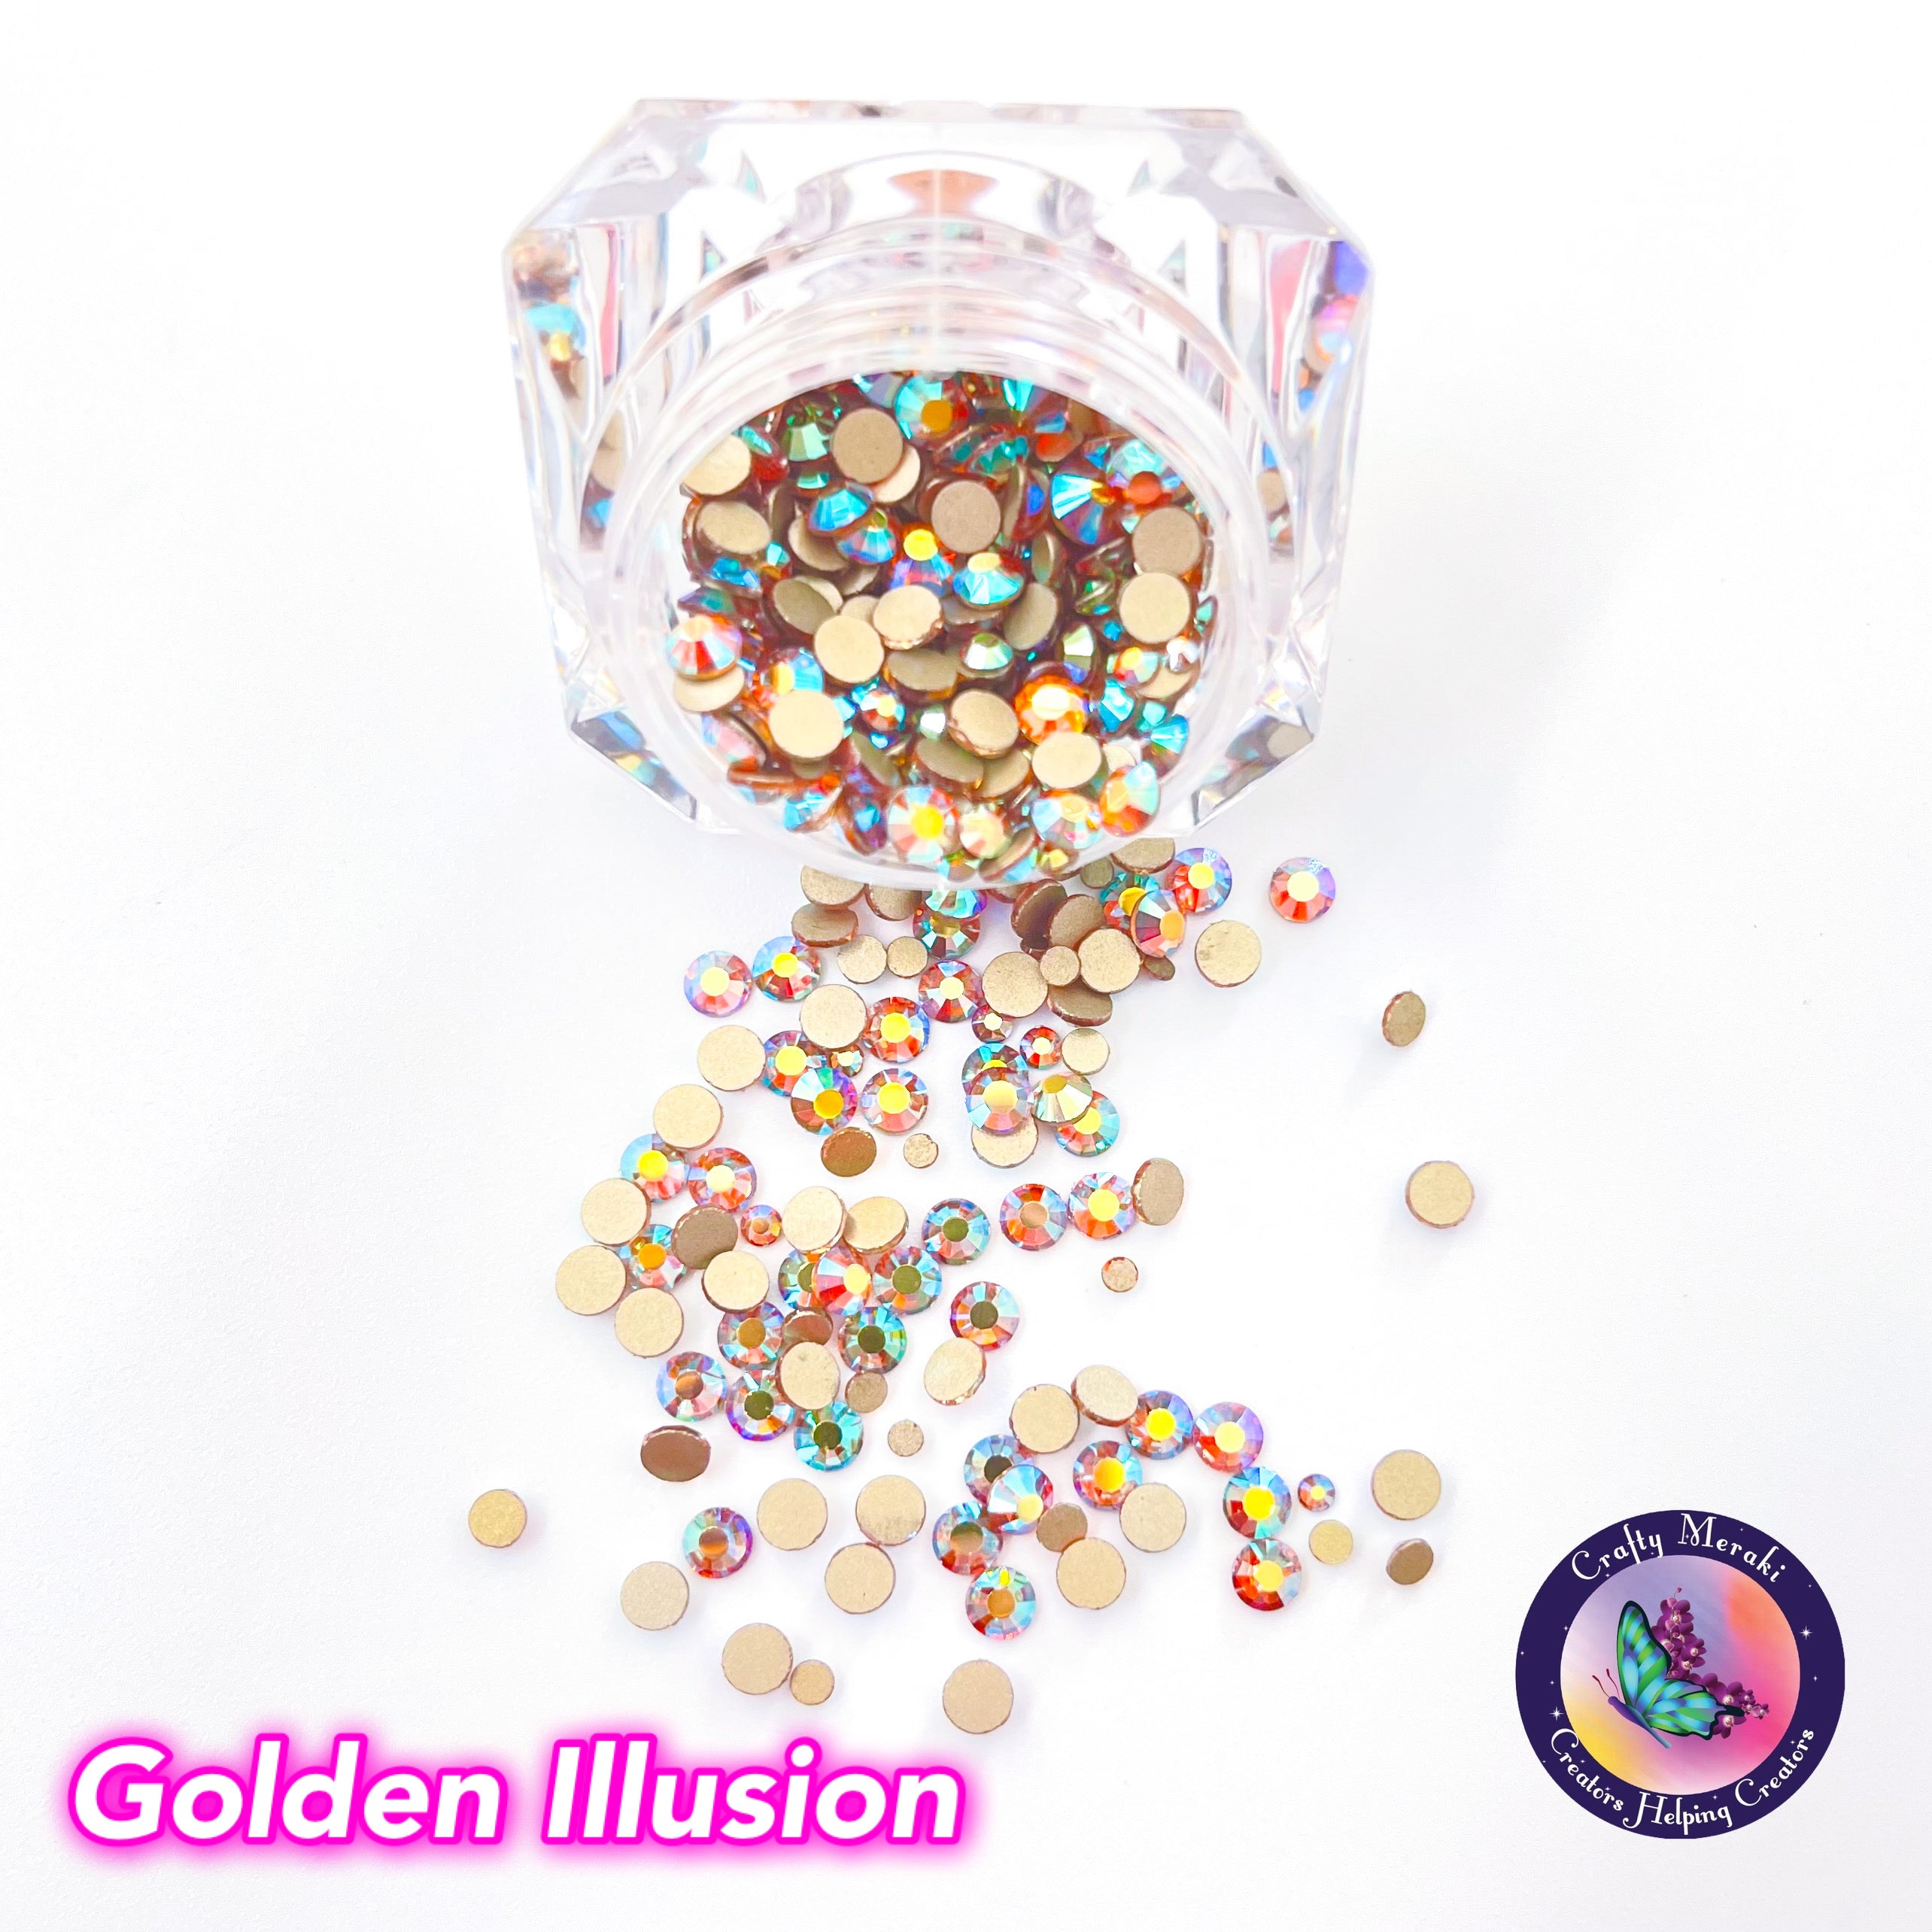 Meraki Sparkle Golden Illusion - Crafty Meraki